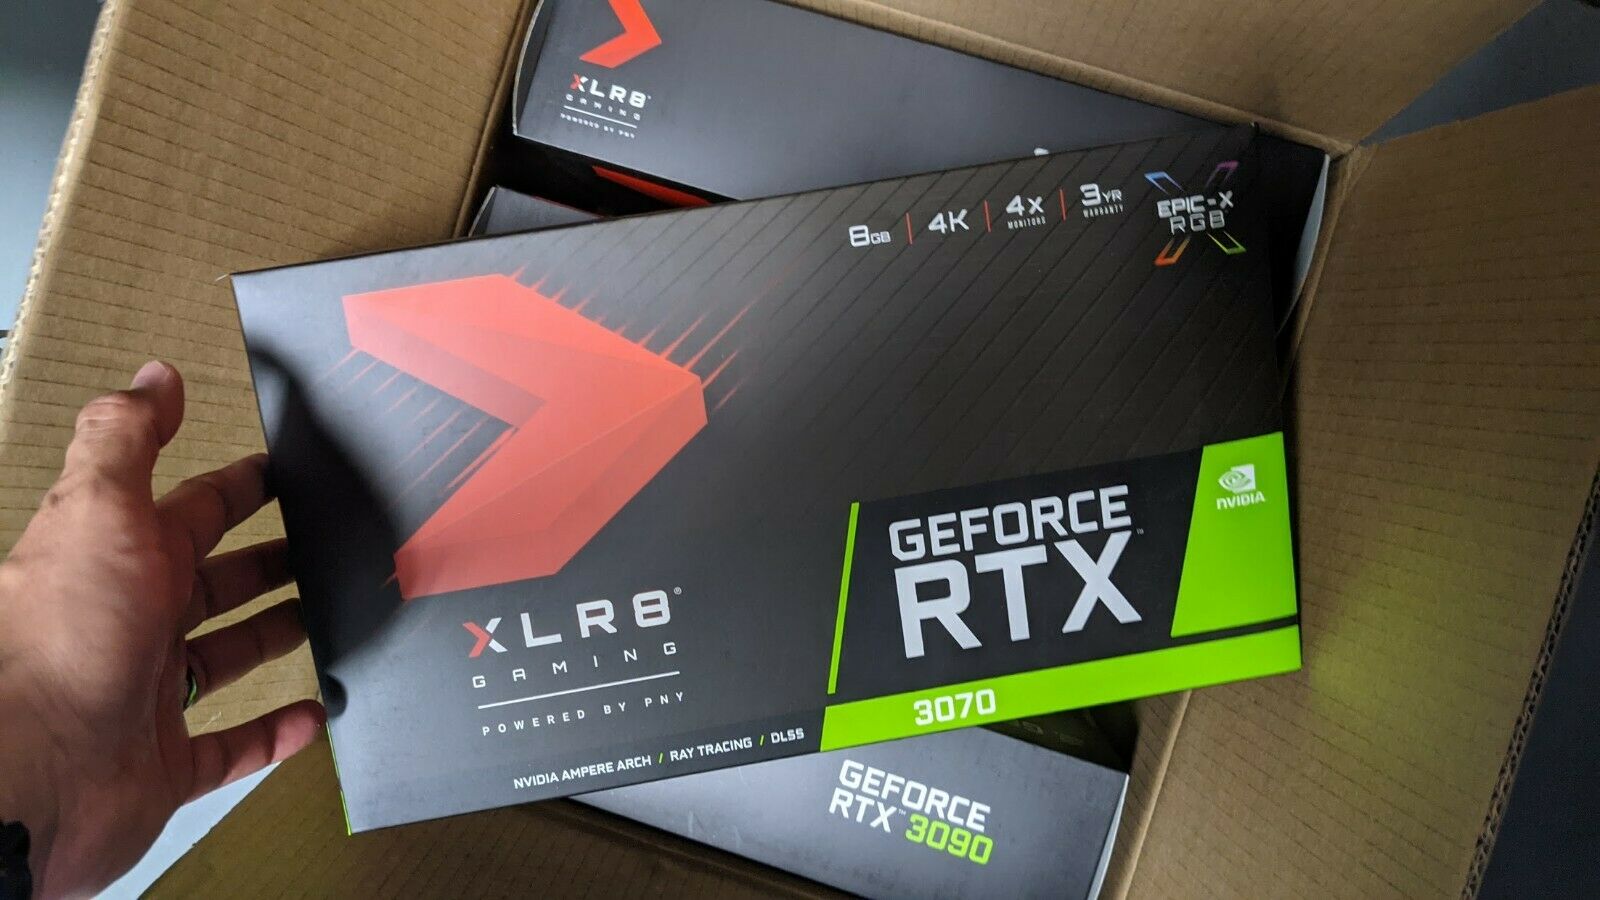 GeForce RTX 3070 RTX  3060 GeForce RTX 3090 Graphics Cards